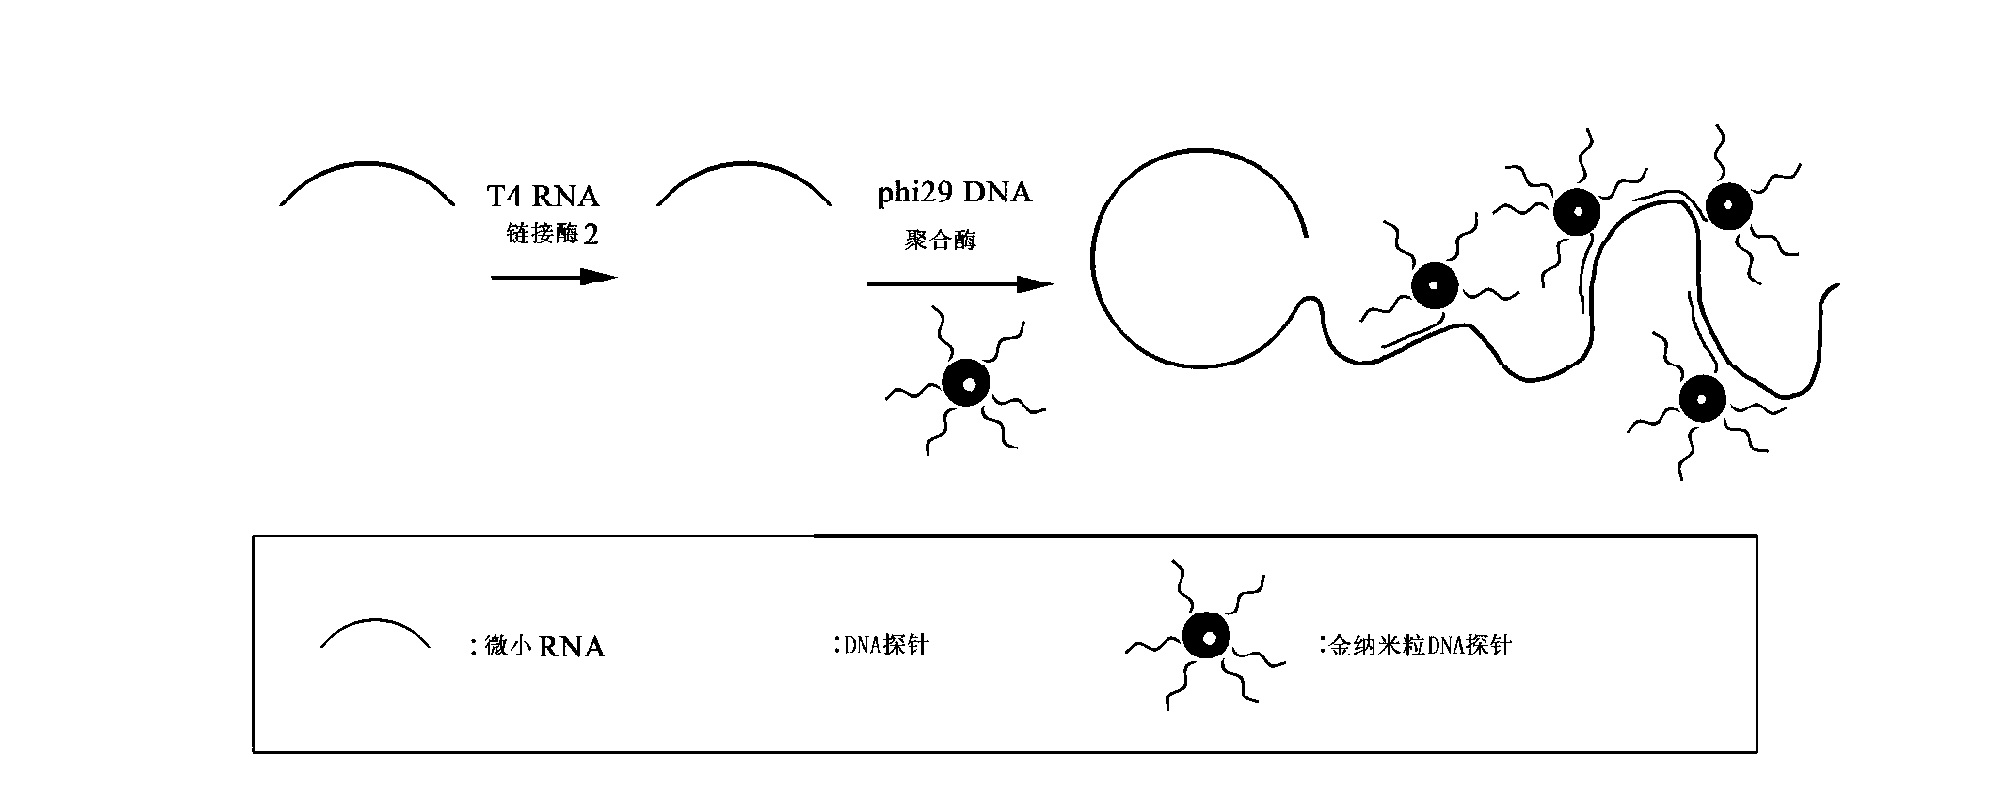 Micro-RNA (Ribonucleic Acid) colorimetric detection method based on rolling circle amplification